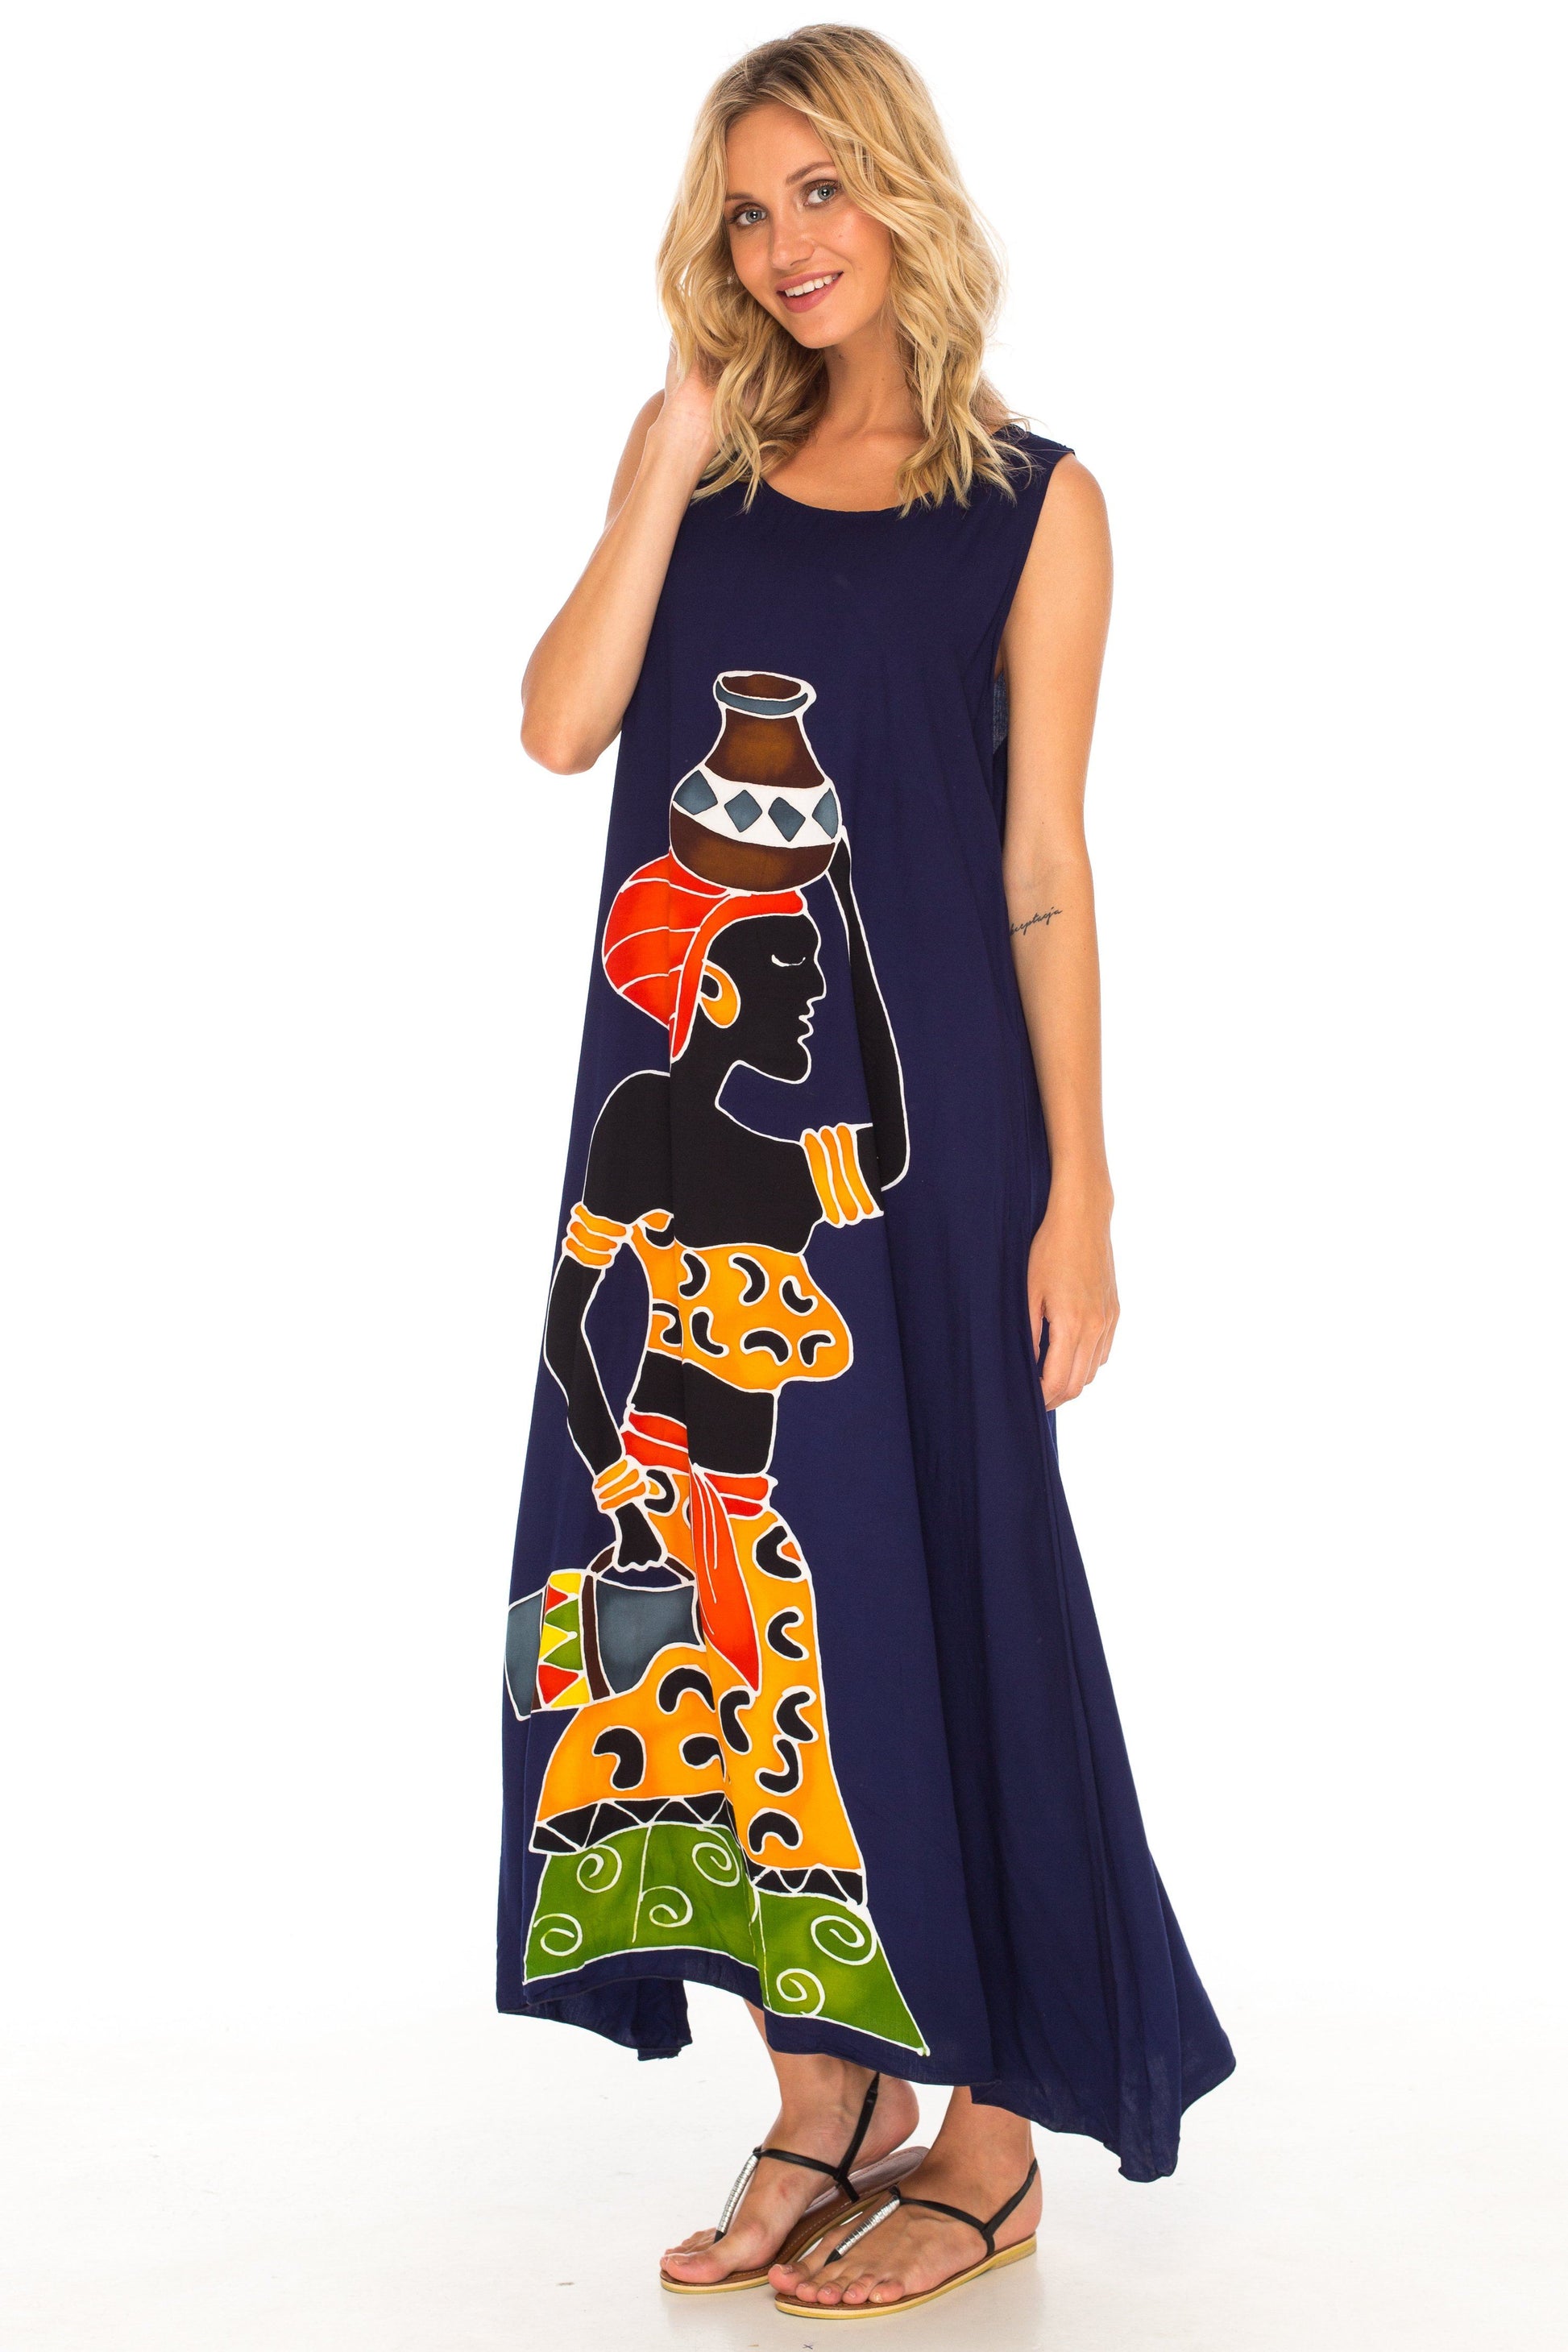 Sleeveless Summer Tank Dress with Hand-painted Tribal Design - Love-ShuShi-navy blue dress-Shu-Shi